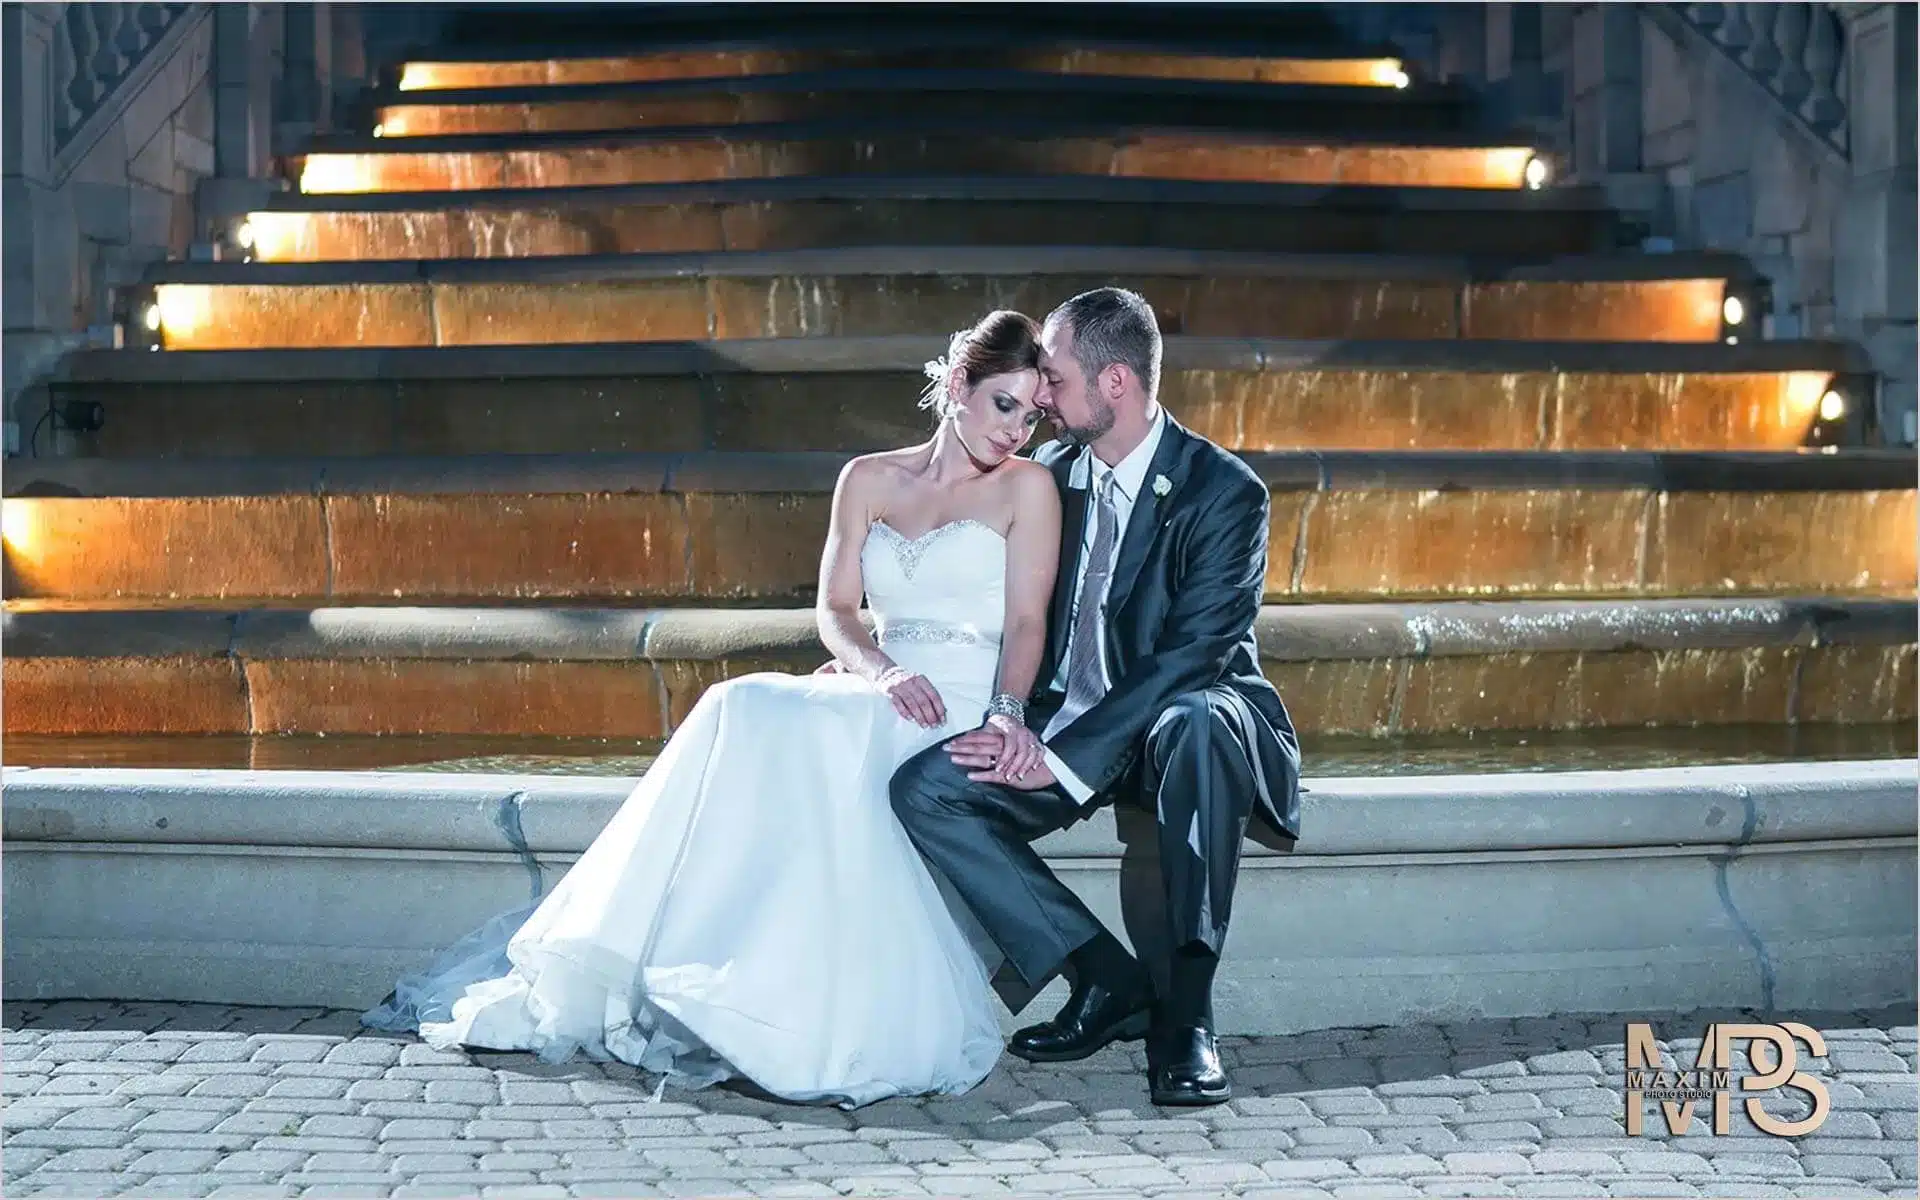 Wedding Photographer Cost in Cincinnati and Nashville